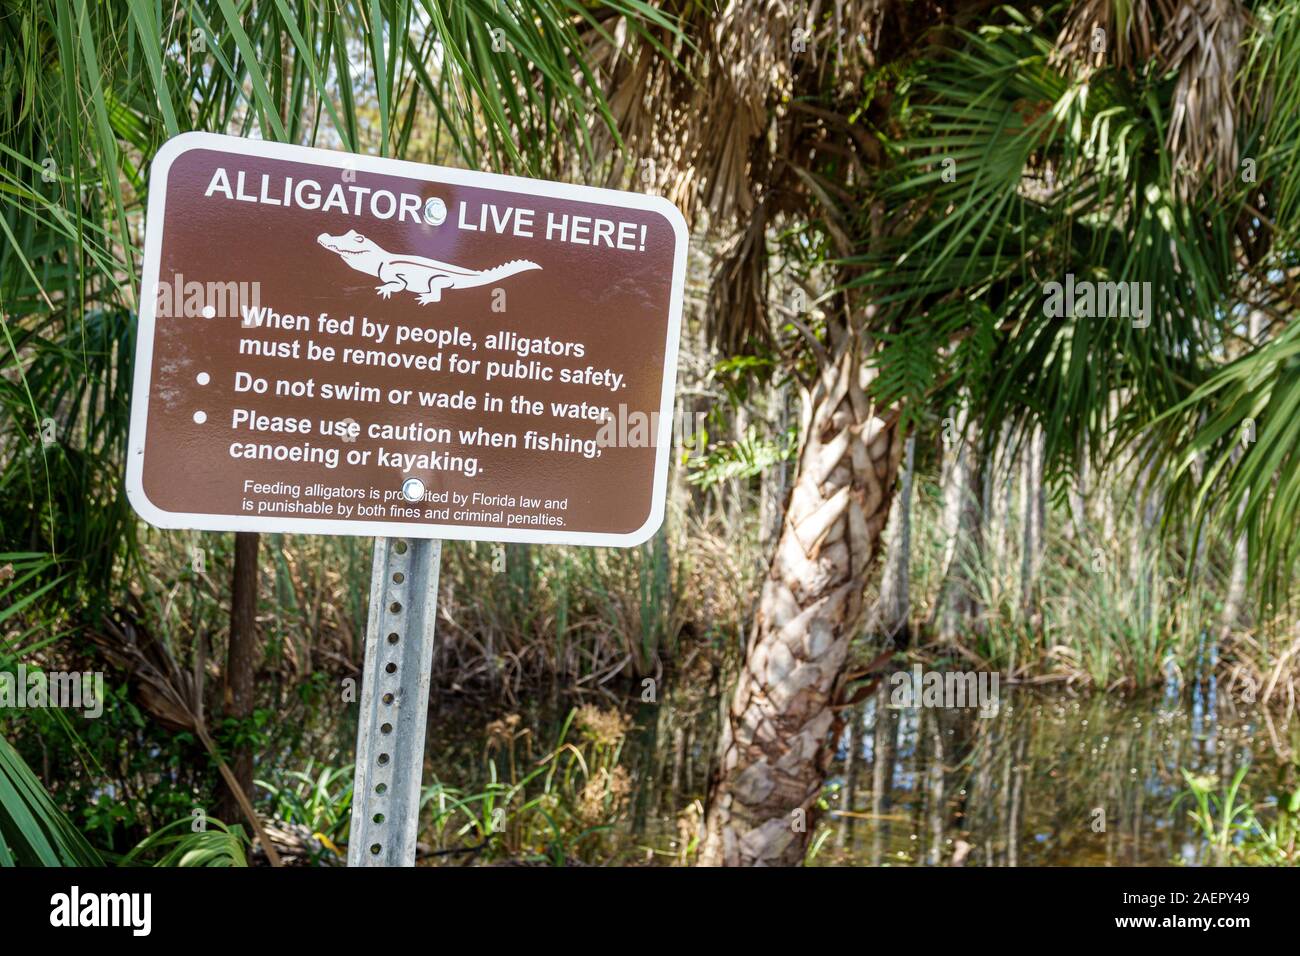 Palm Beach Gardens Florida, Loxahatchee Slough Naturgebiet, Feuchtgebiete Preserve, Tierschutzgebiet, Warnschild, lebende Alligatoren, FL191110033 Stockfoto